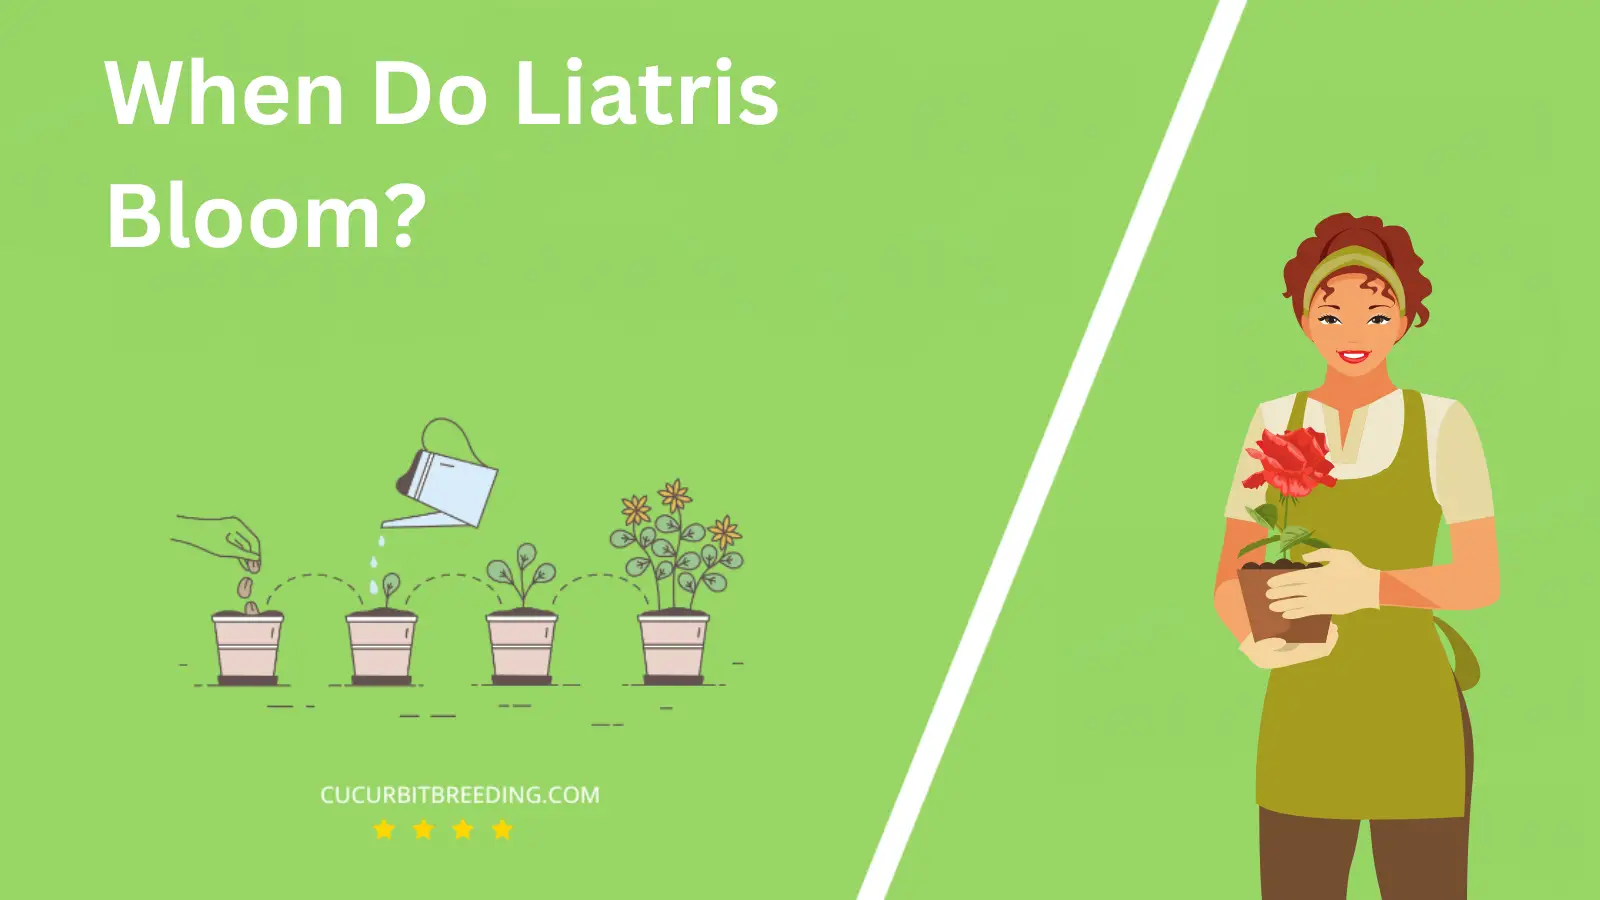 When Do Liatris Bloom?